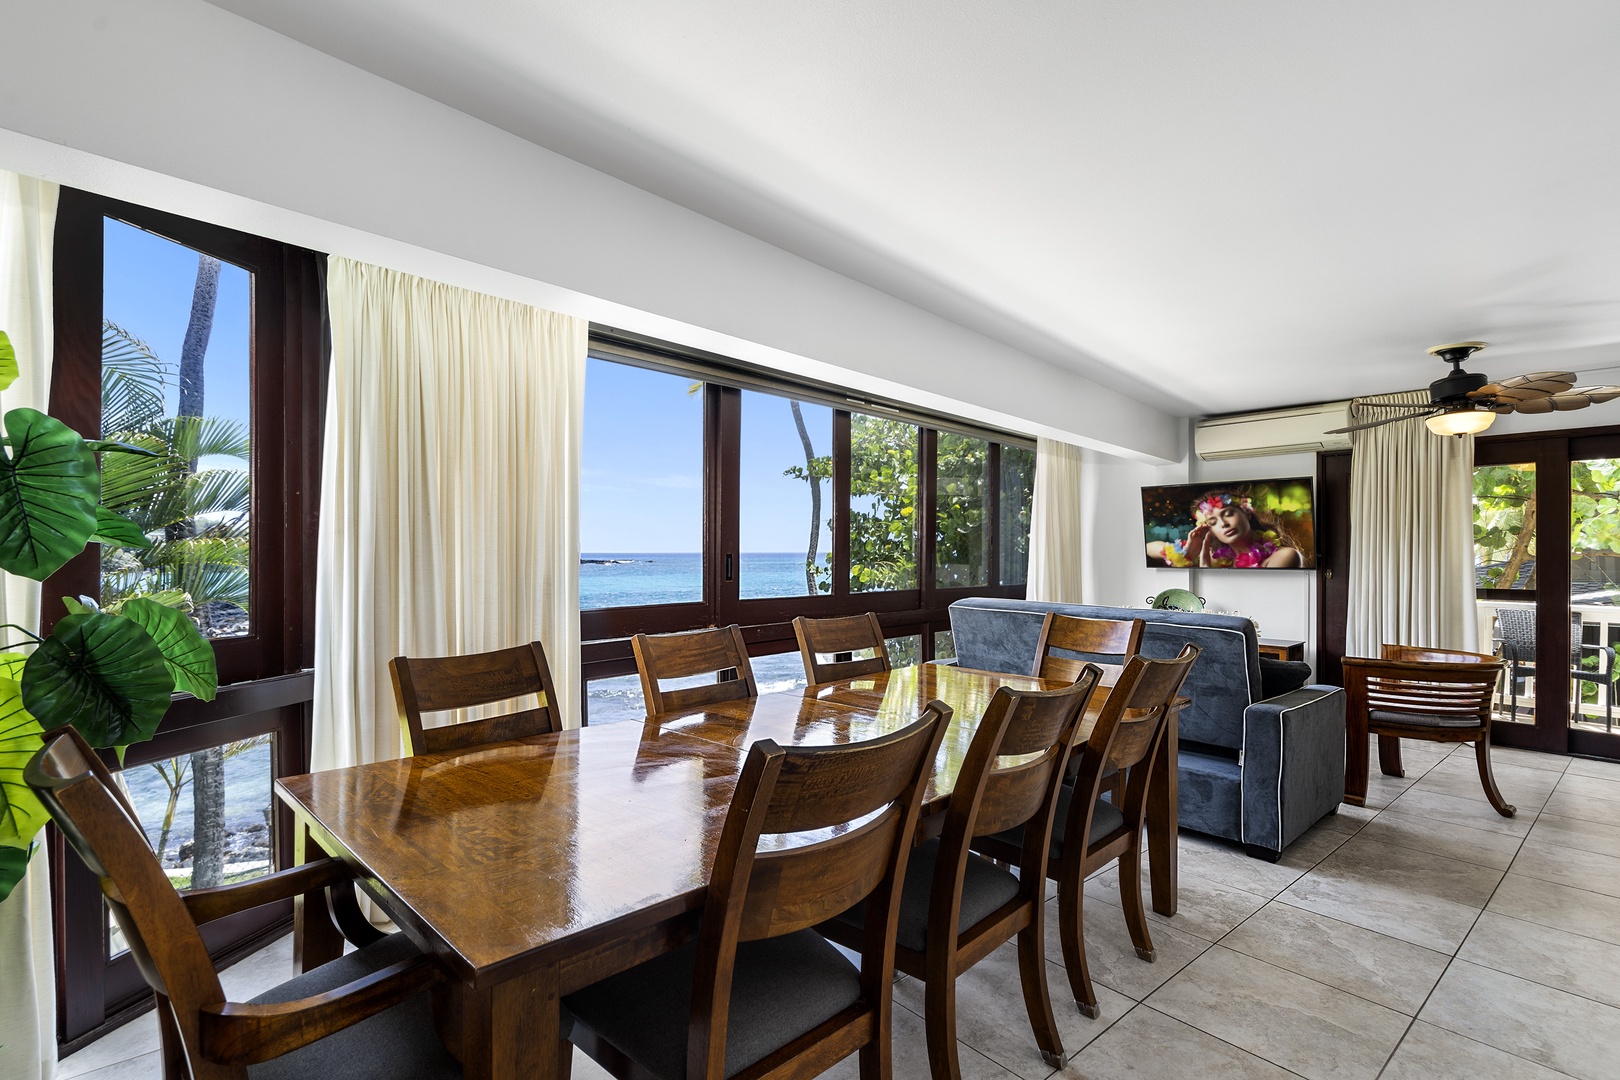 Kailua Kona Vacation Rentals, Kona's Shangri La - Indoor dining for 8!